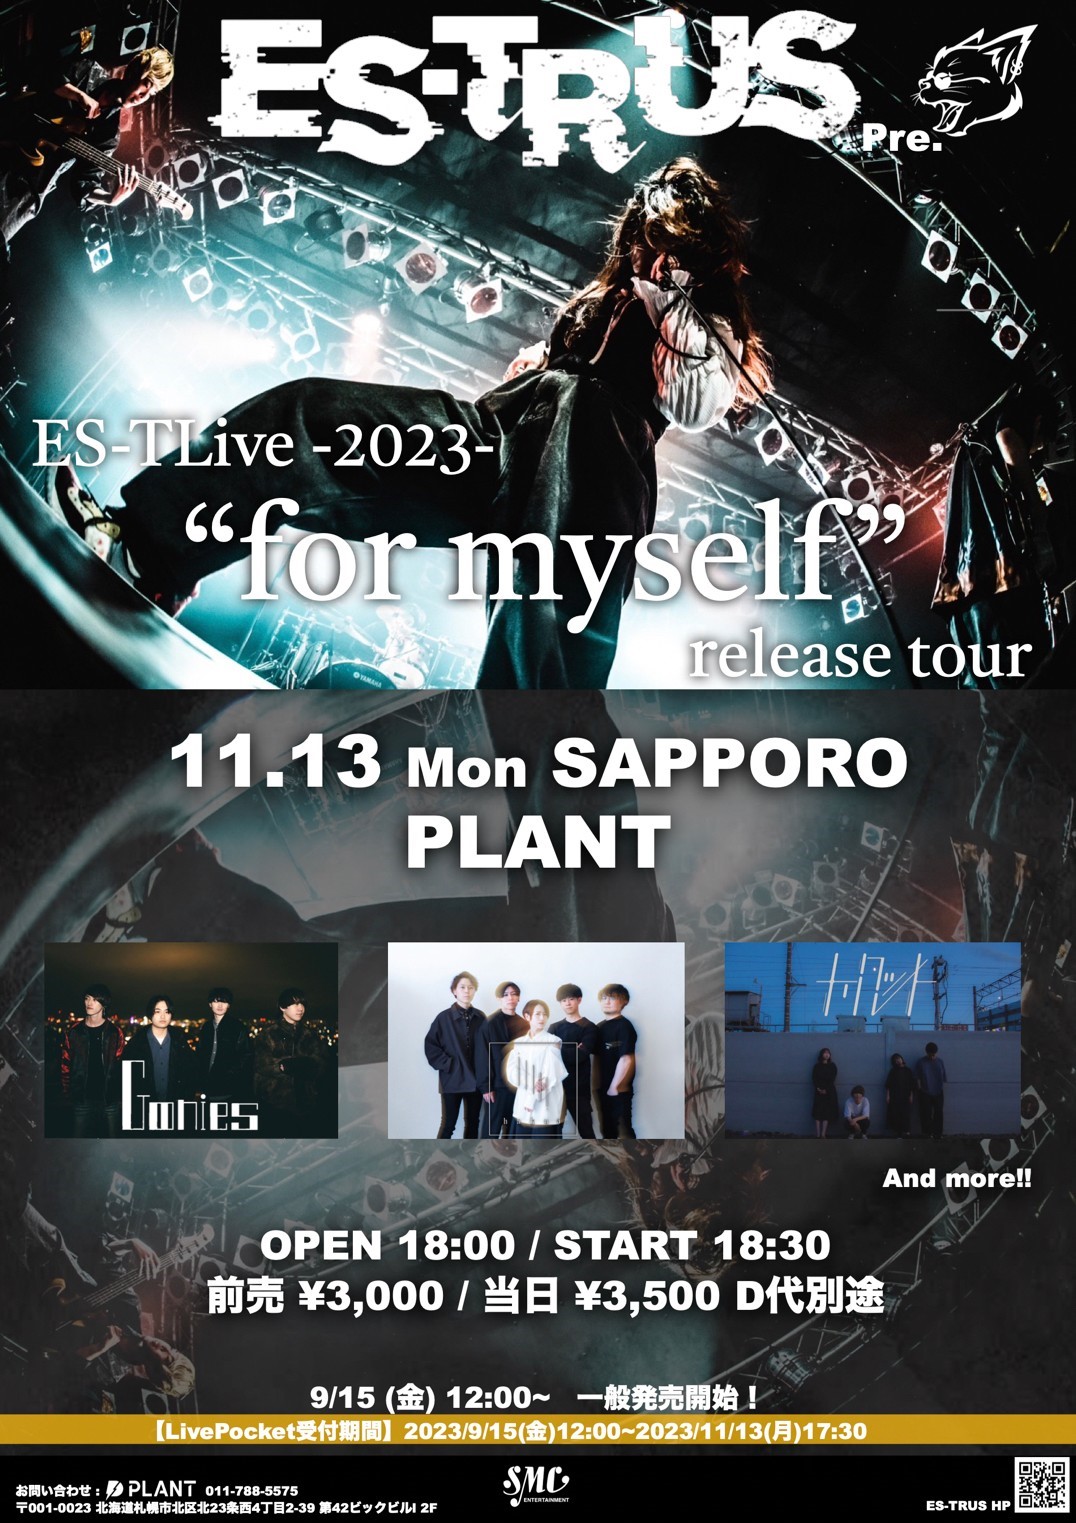 ES-TLive 2023 “for myself” release tour